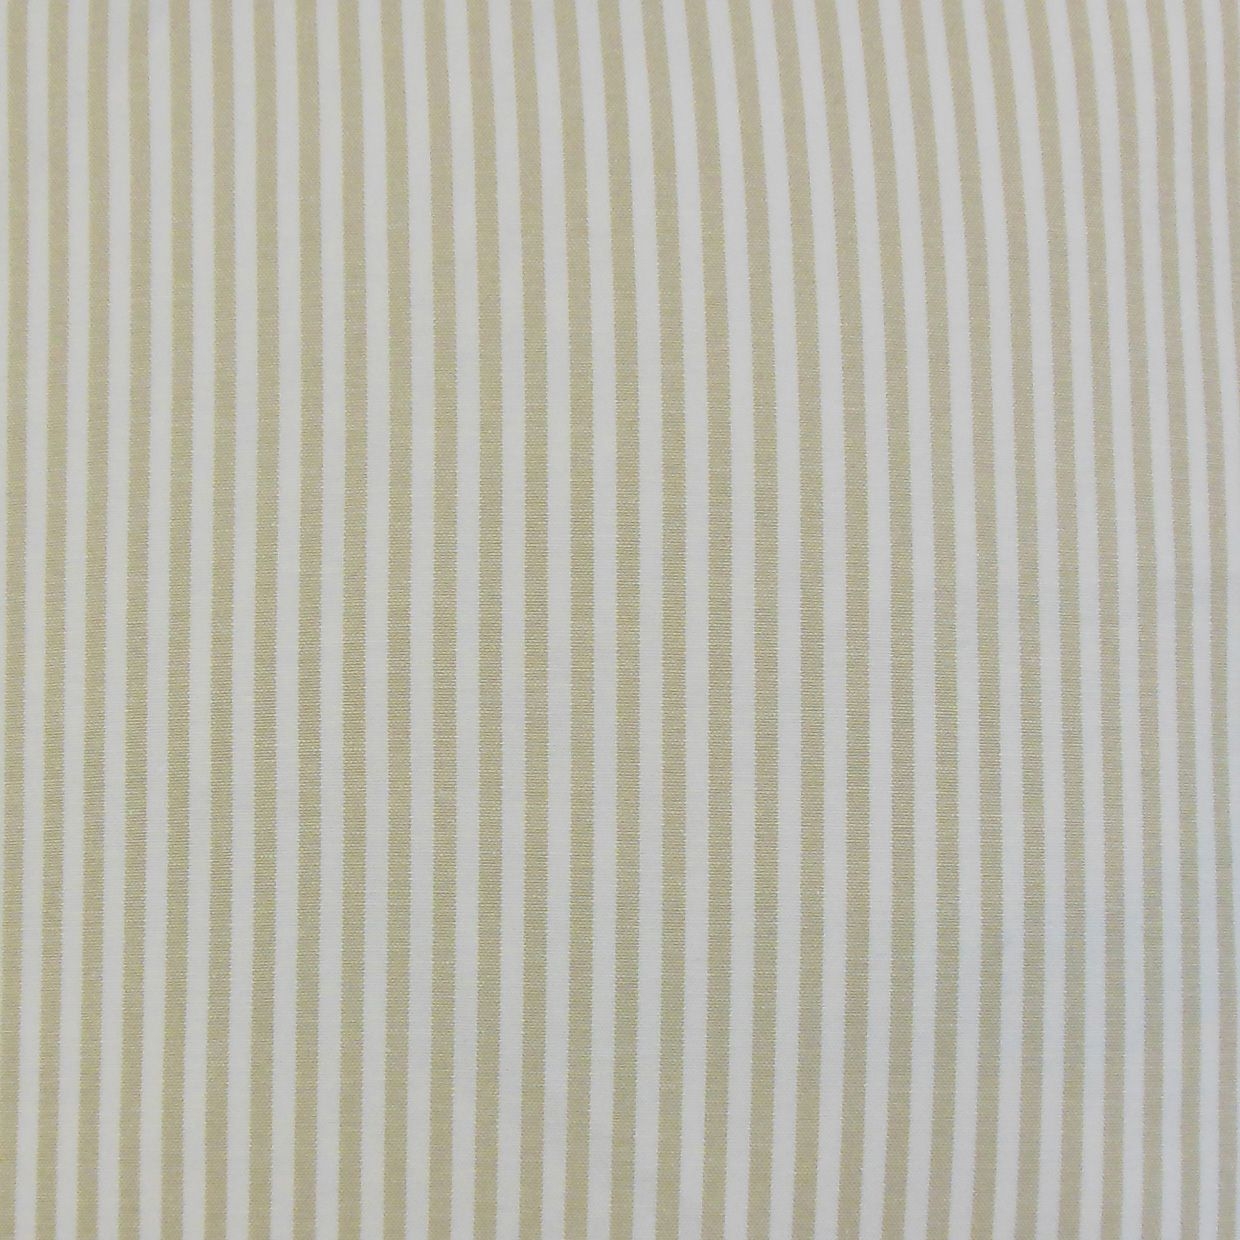 Classic Stripe Pillow, Beige, 20" x 20" - Image 1